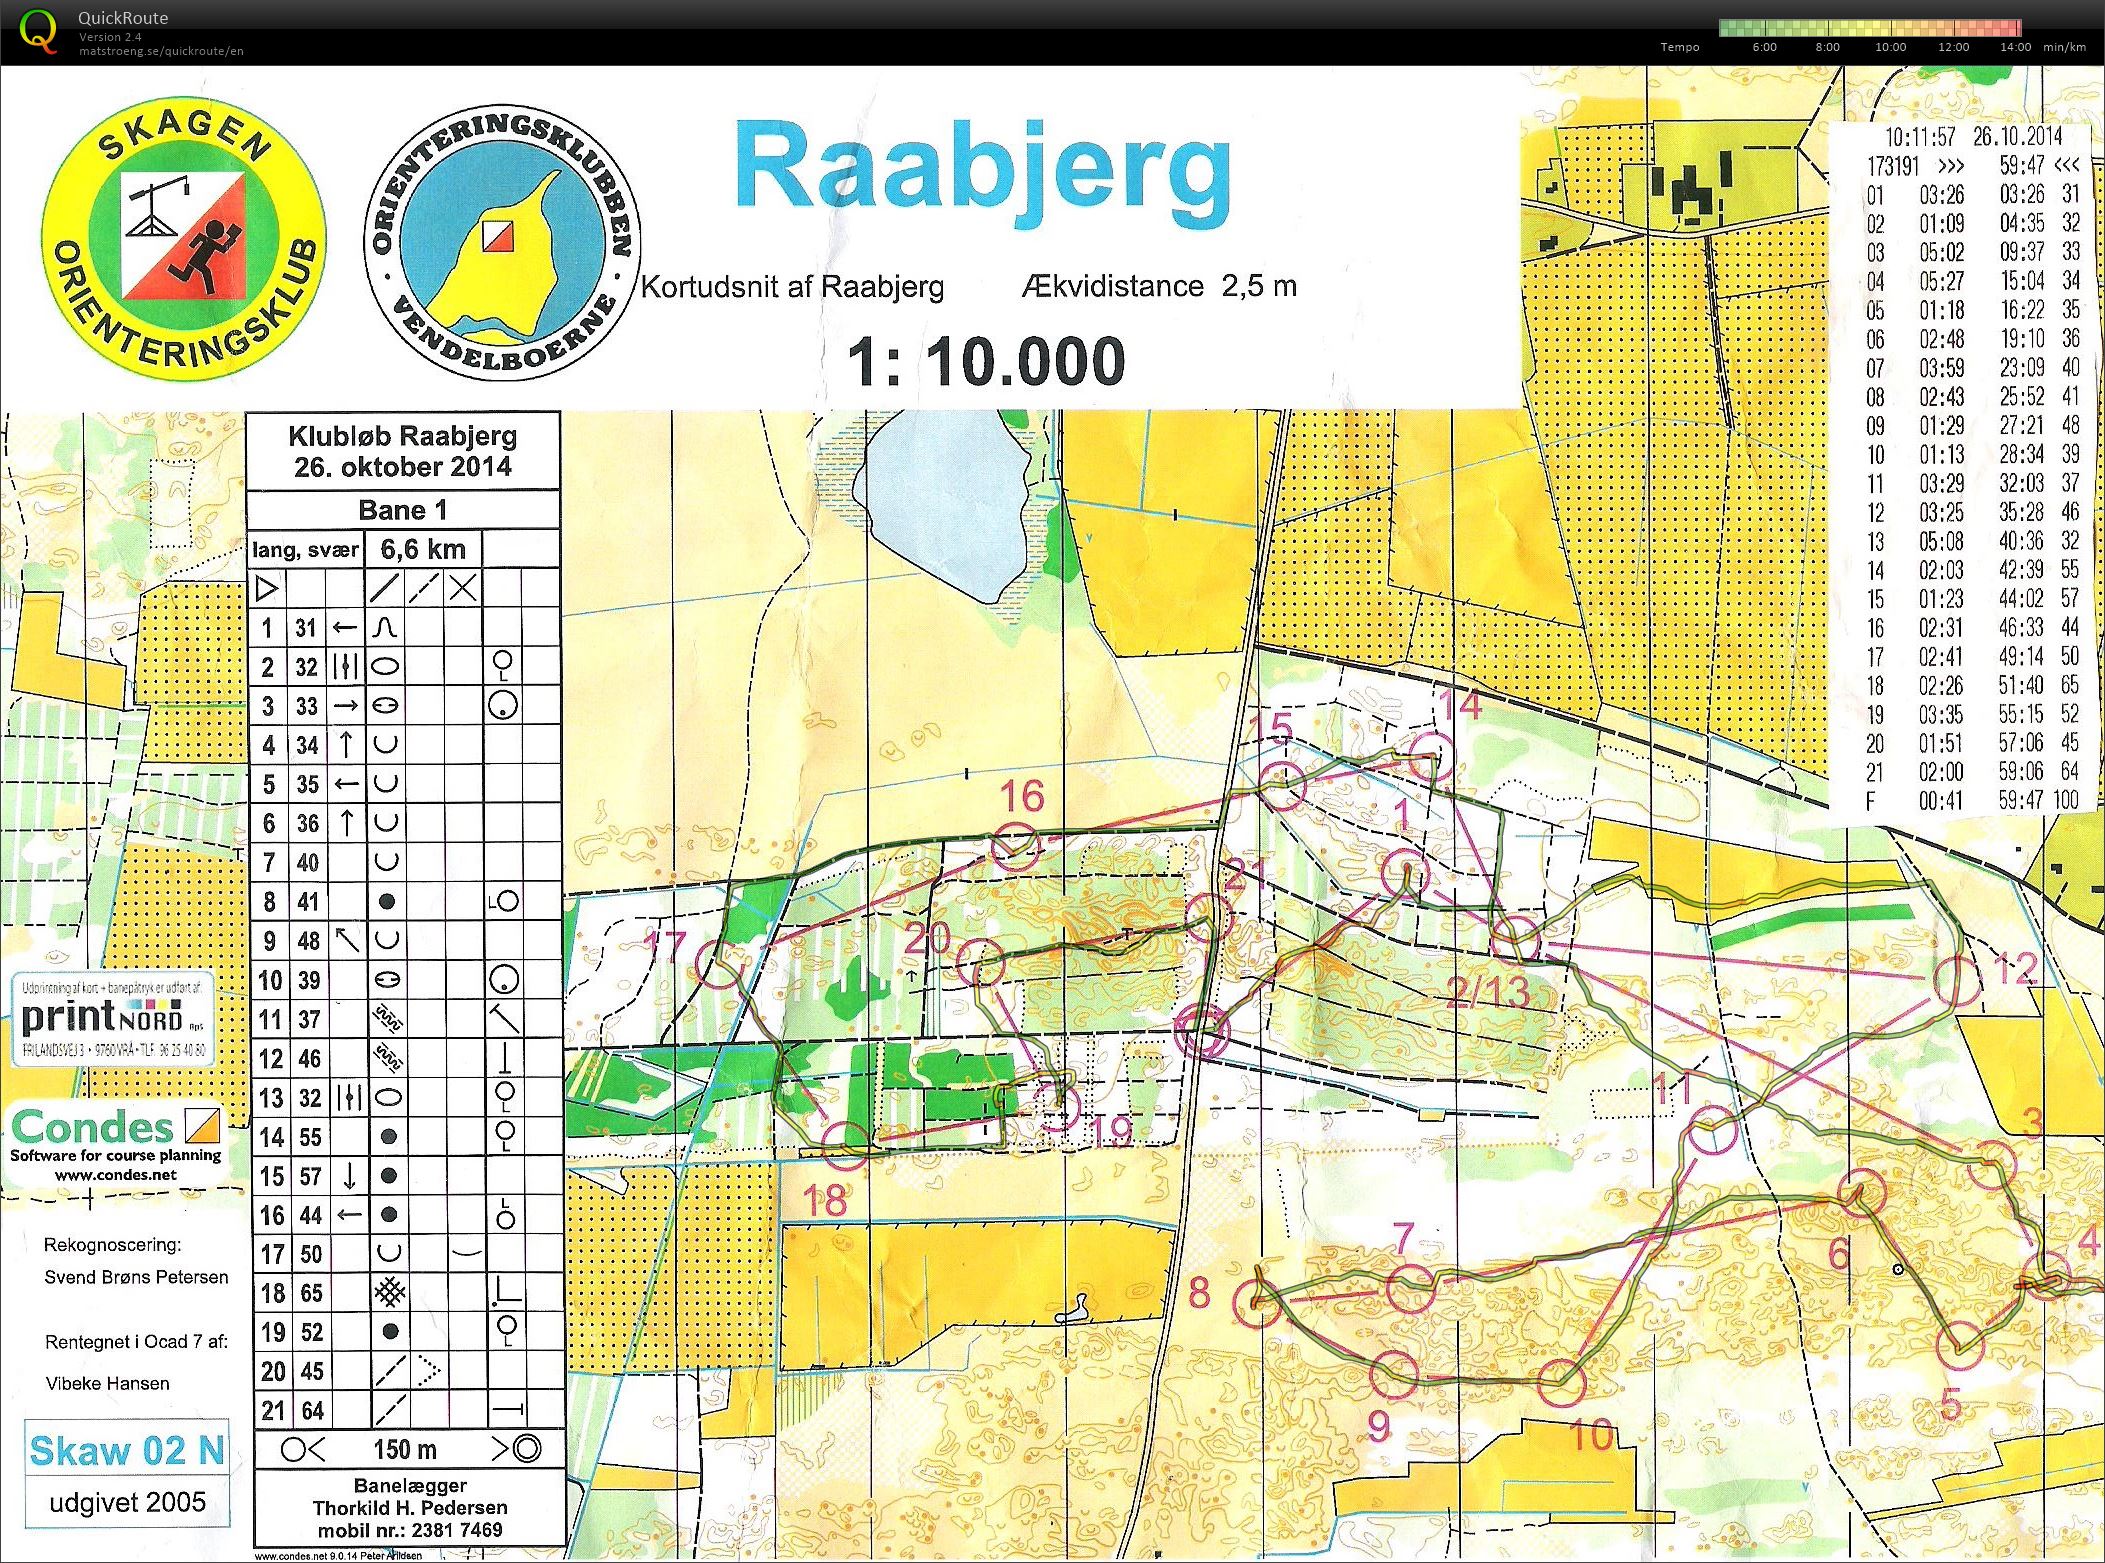 Raabjerg - bane 1 - 6,6 km (26/10/2014)